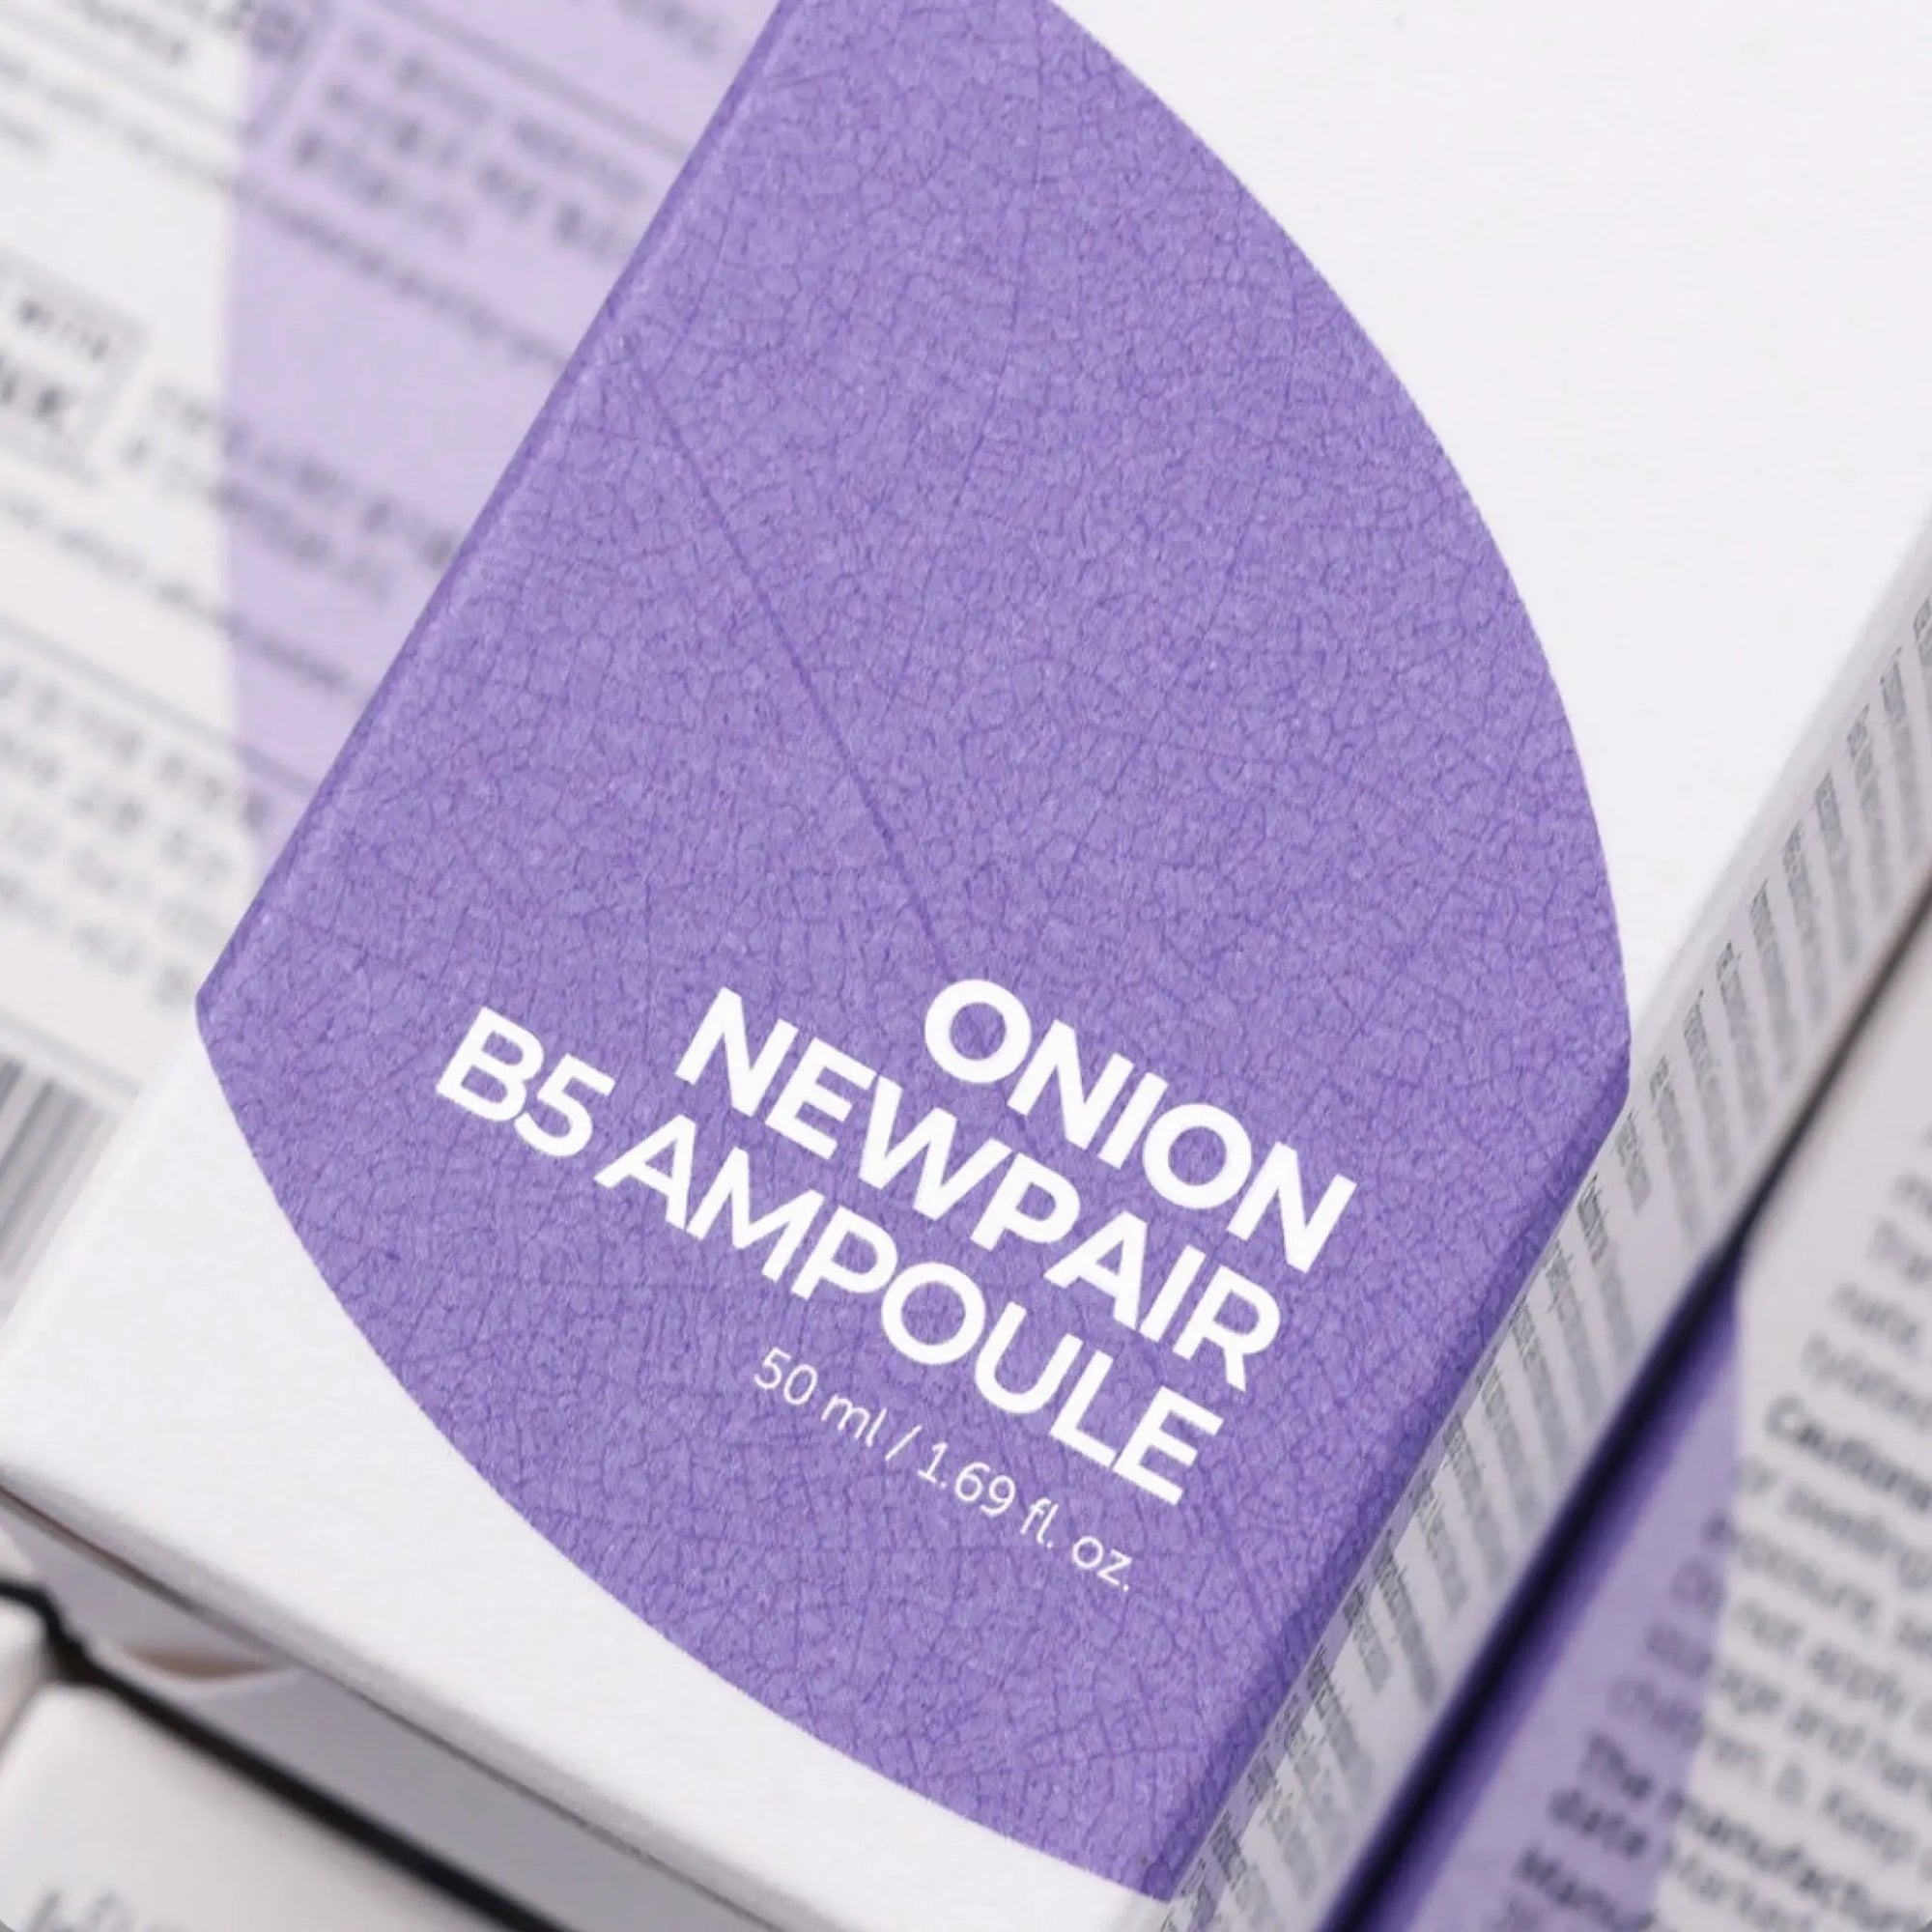 Isntree - Onion Newpair B5 Ampoule 50mL WanderShop